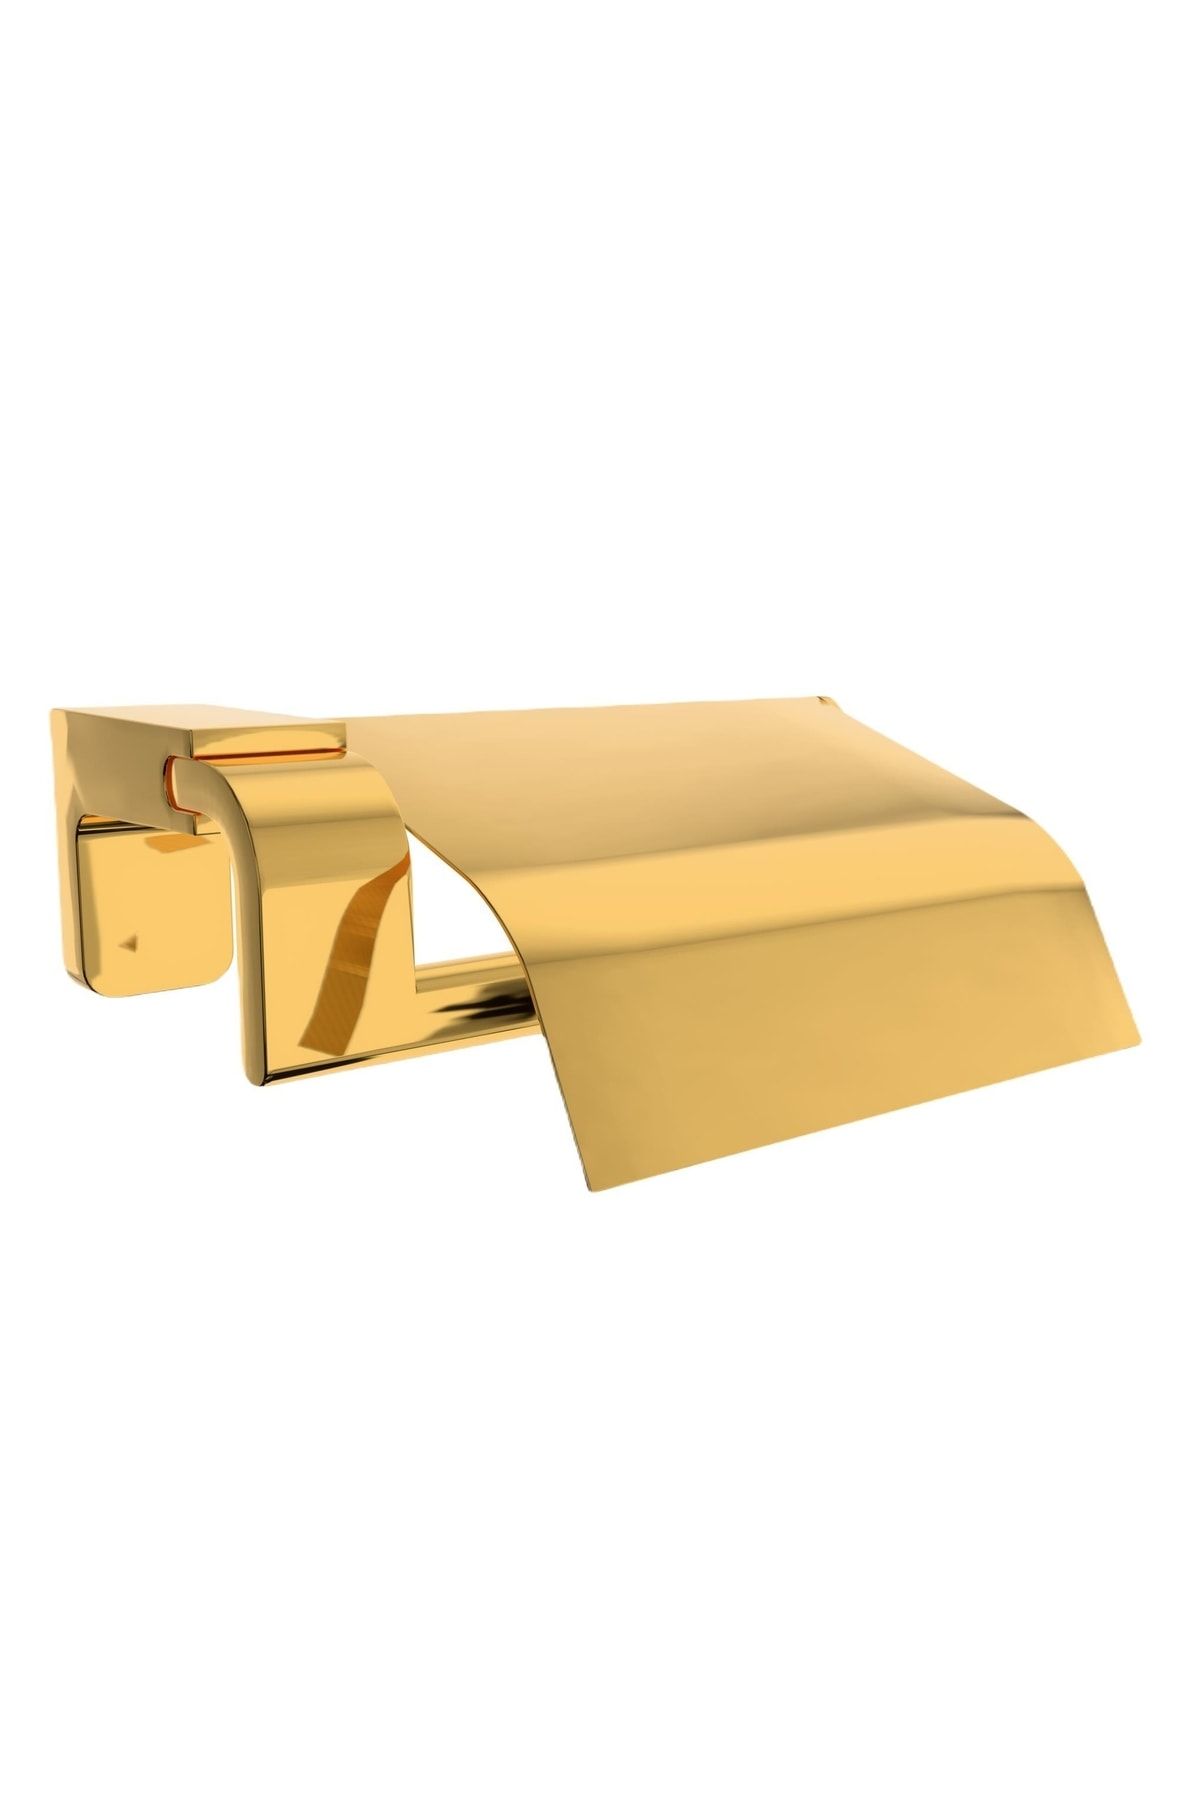 Zethome F1 Paslanmaz Duvara Monte Gold Tuvalet Kapaklı Kağıtlık Altın Rengi, Banyo Tuvalet Kağıtlığı